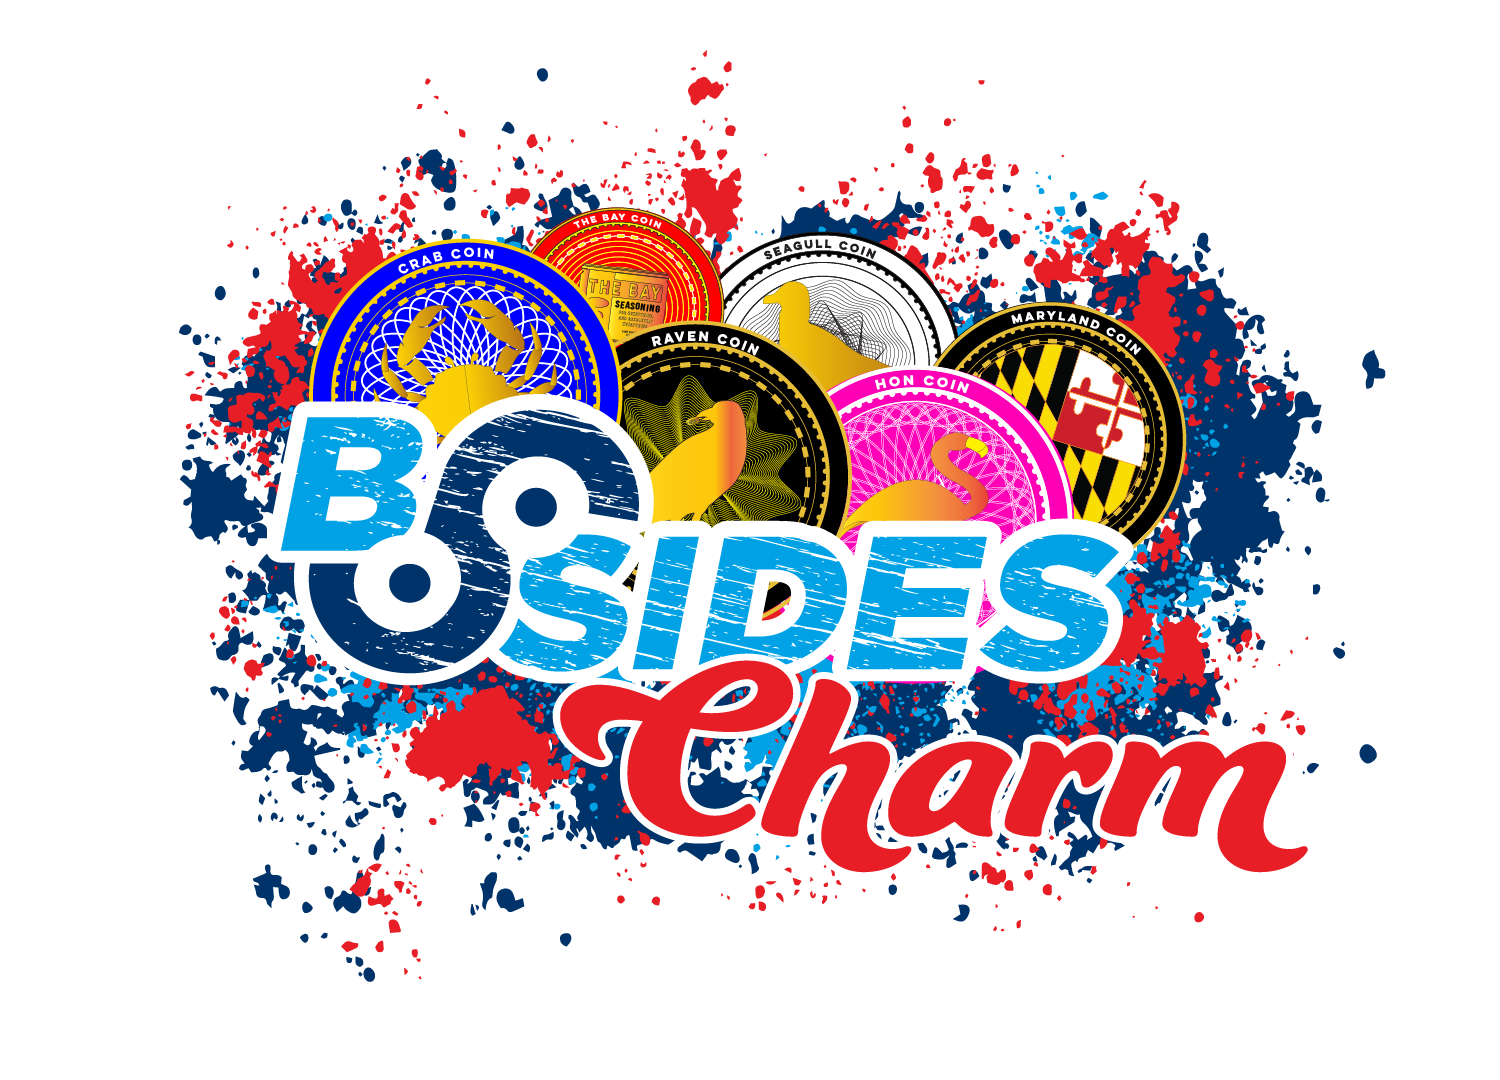 The BSides Charm logo.